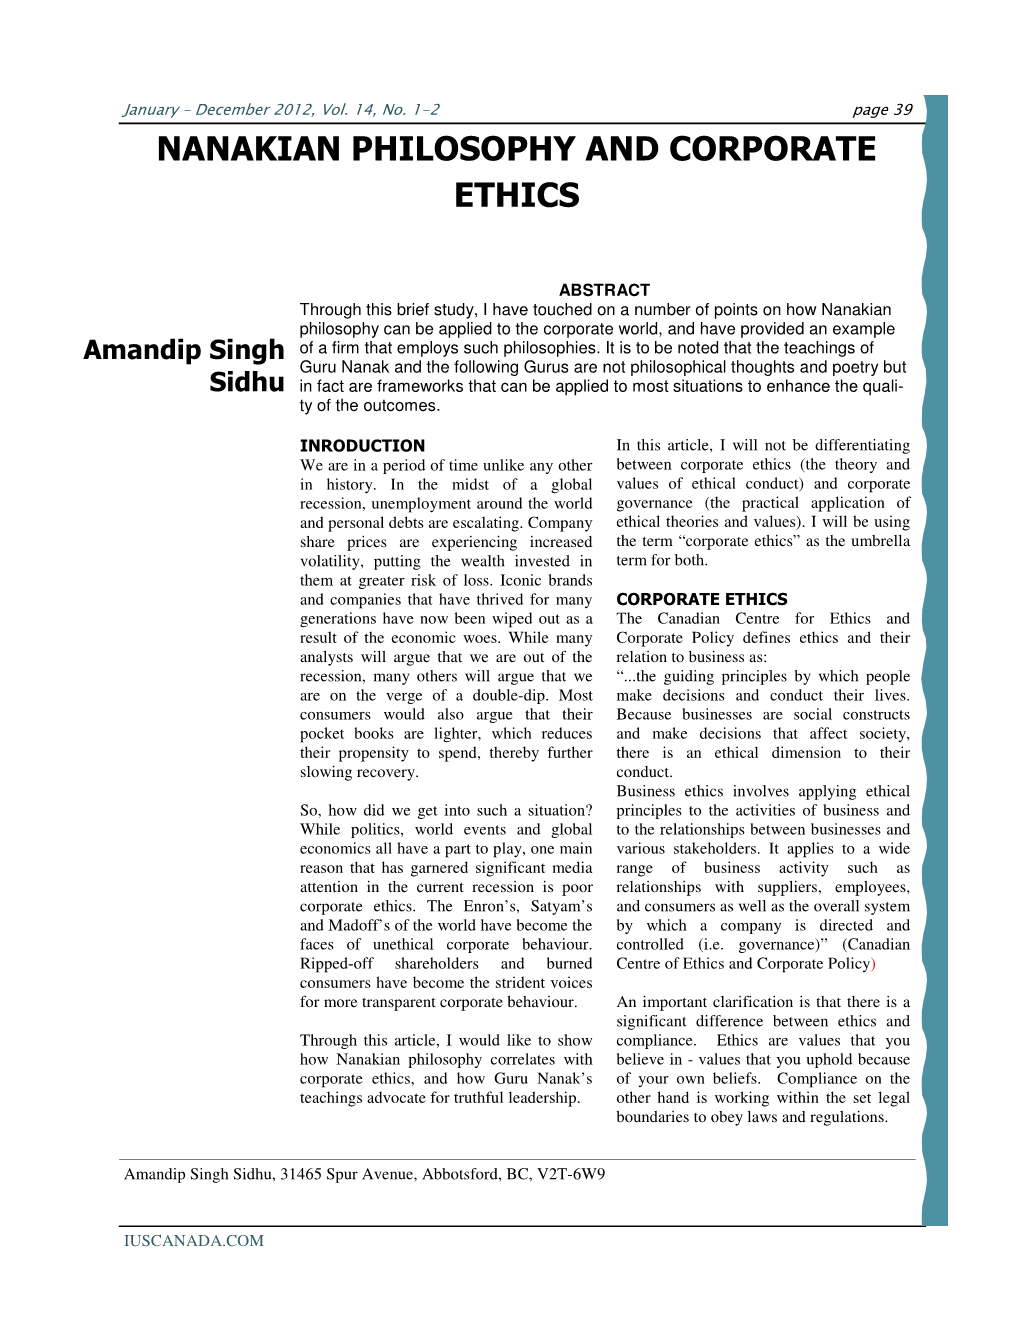 Nanakian Philosophy and Corporate Ethics